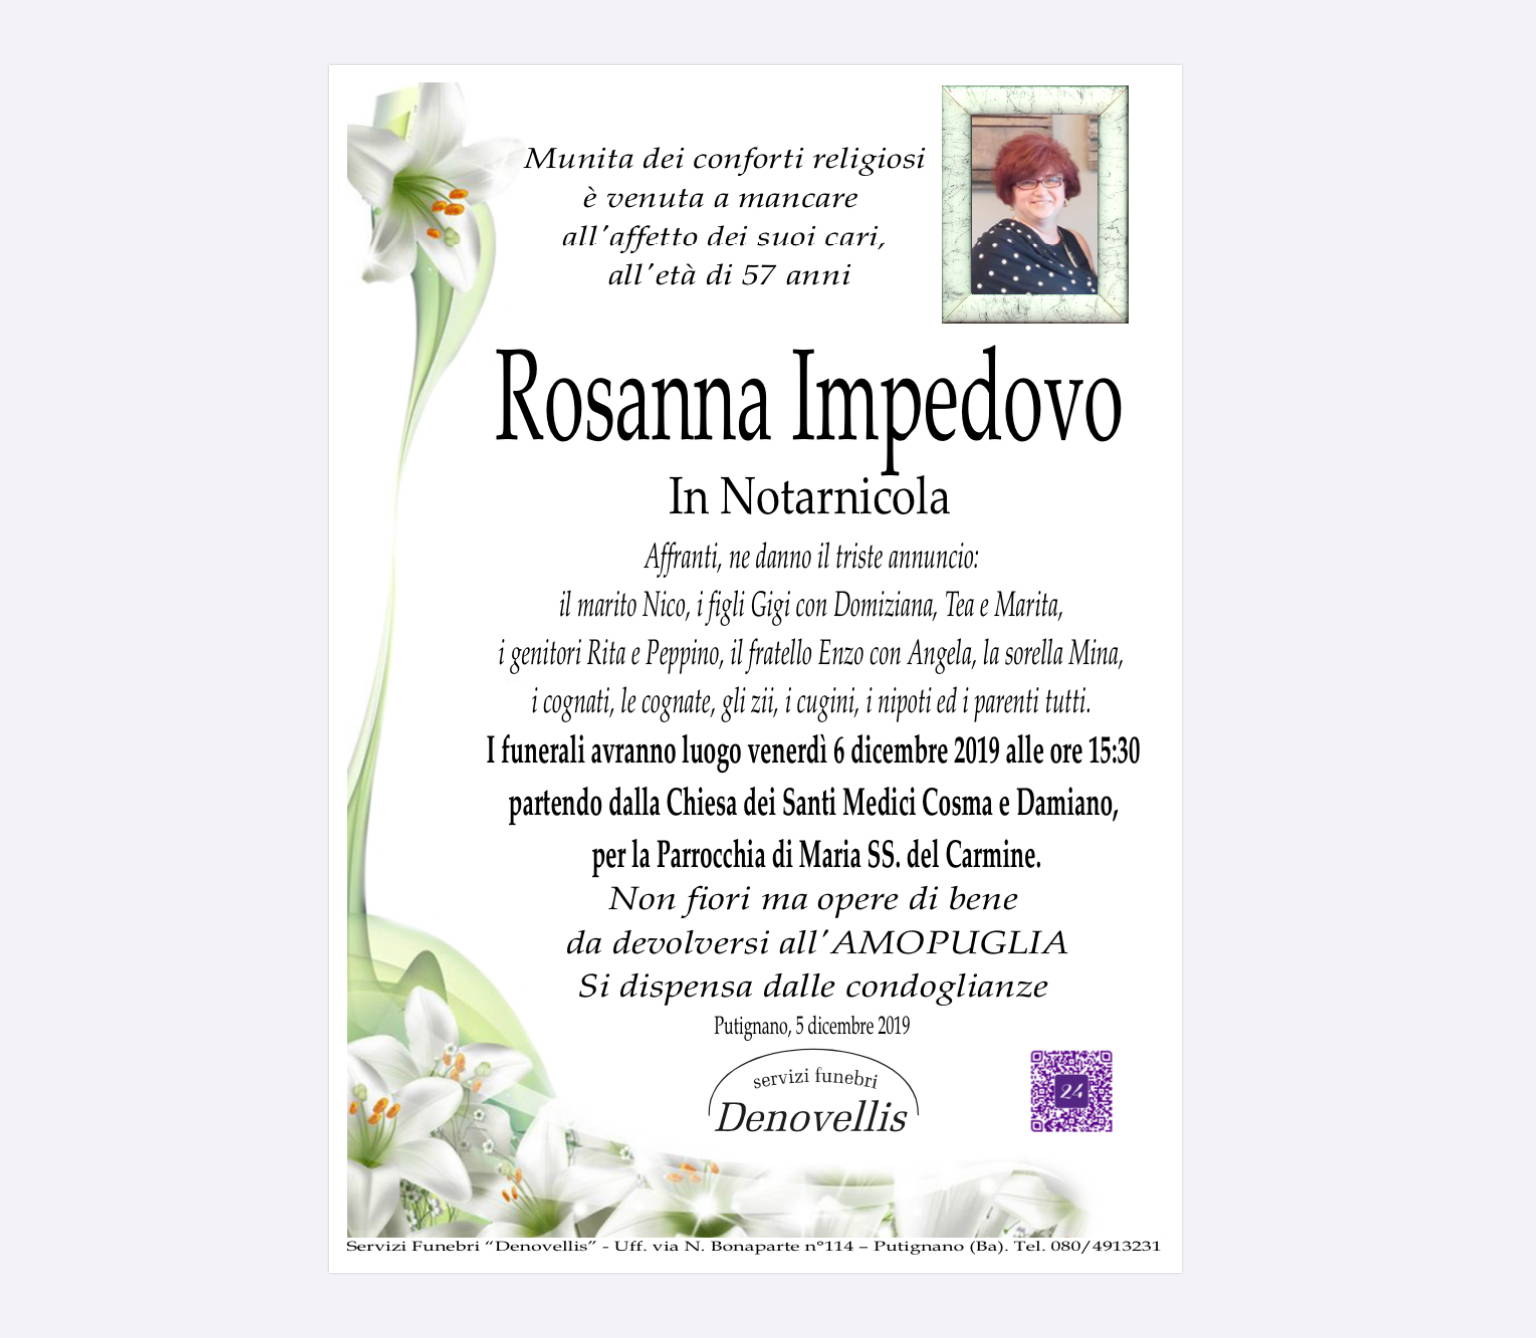 Rosa Anna Impedovo